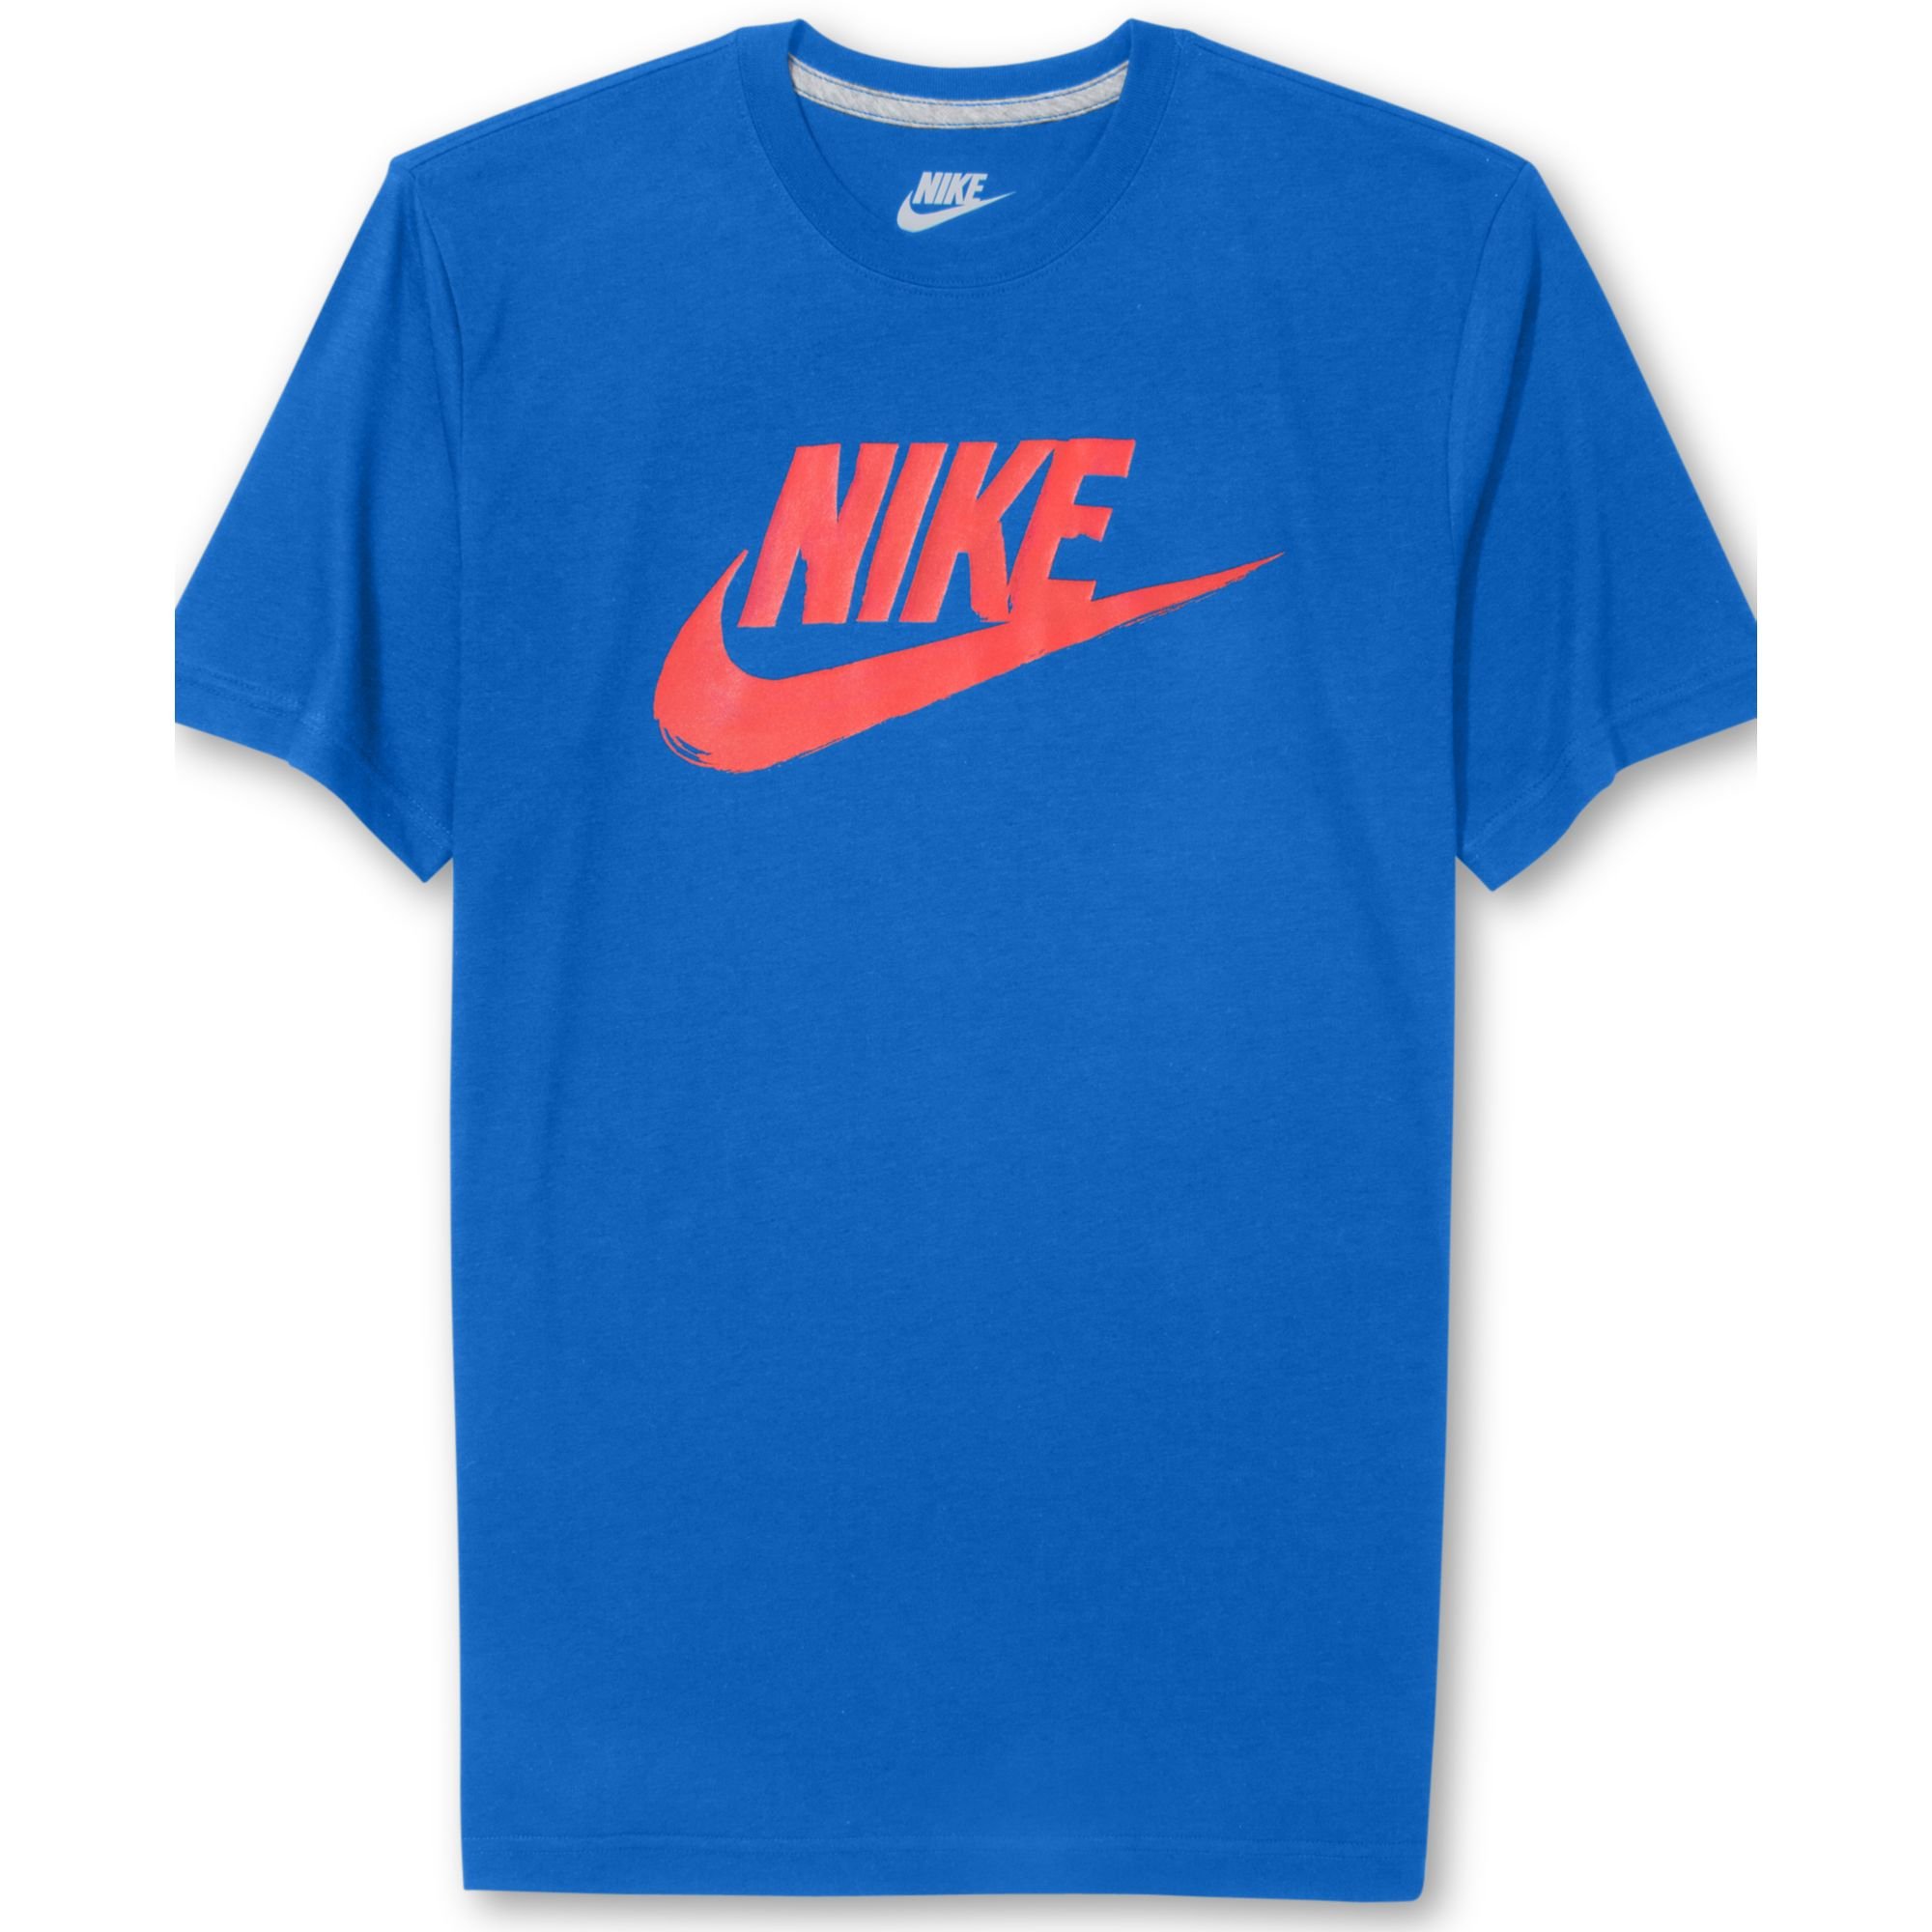 Nike Corporate Logo Shirts